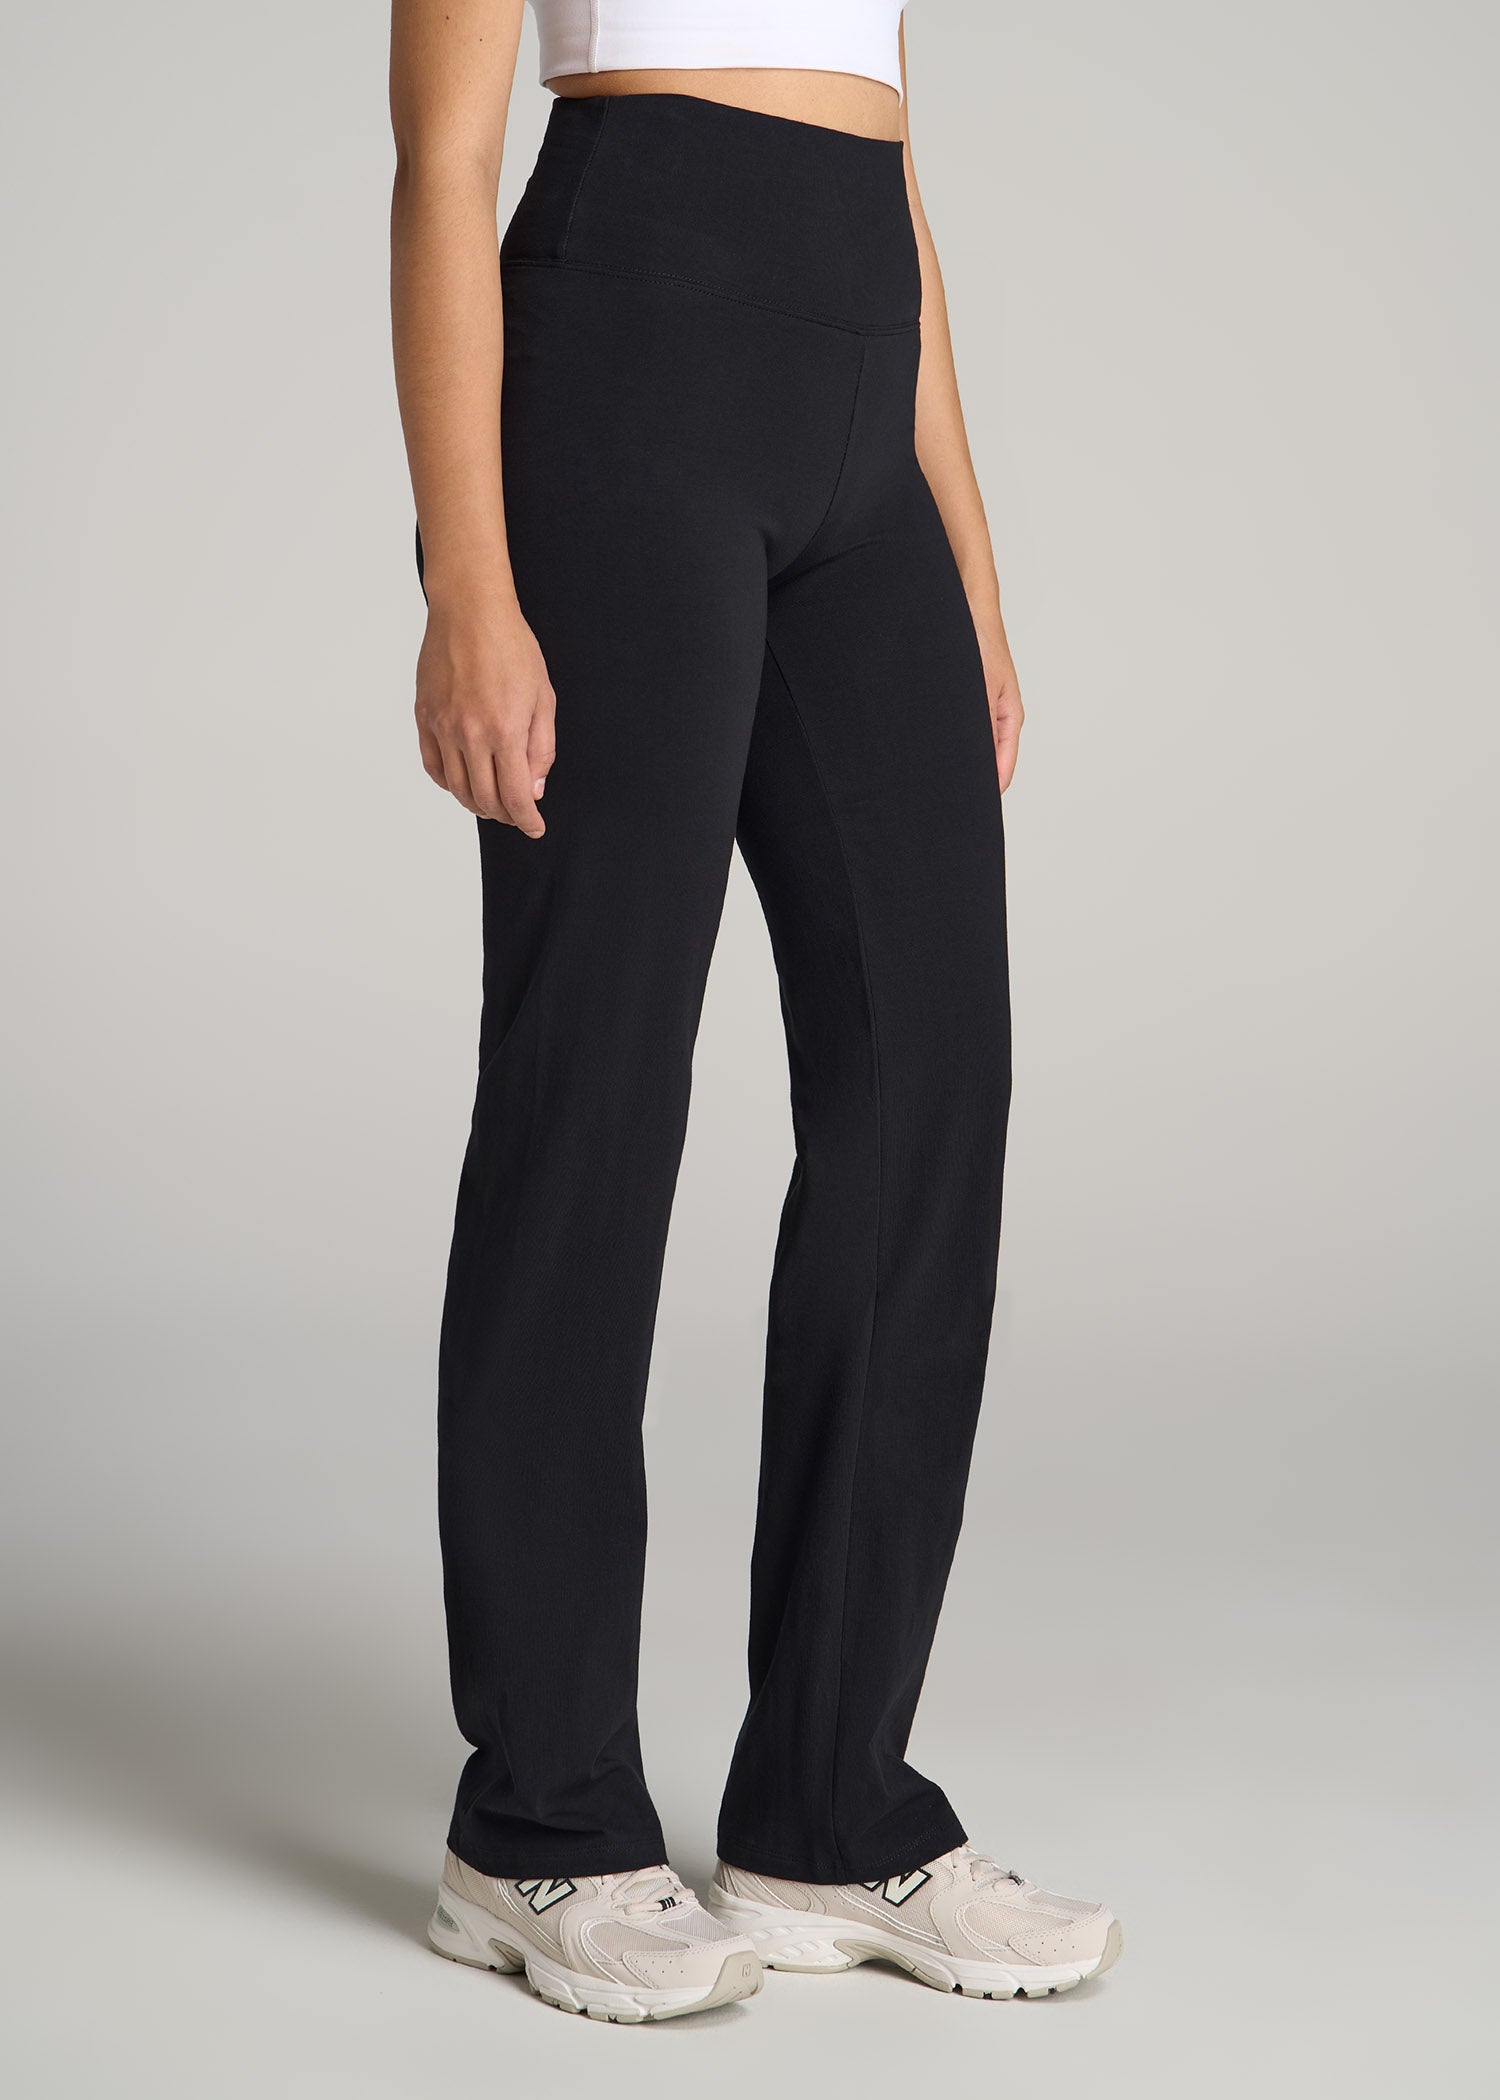 2 Back Pockets,Extra Tall Womens Straight Leg Yoga Pants Workout Pants Slim  Fit,37,Black,Size M